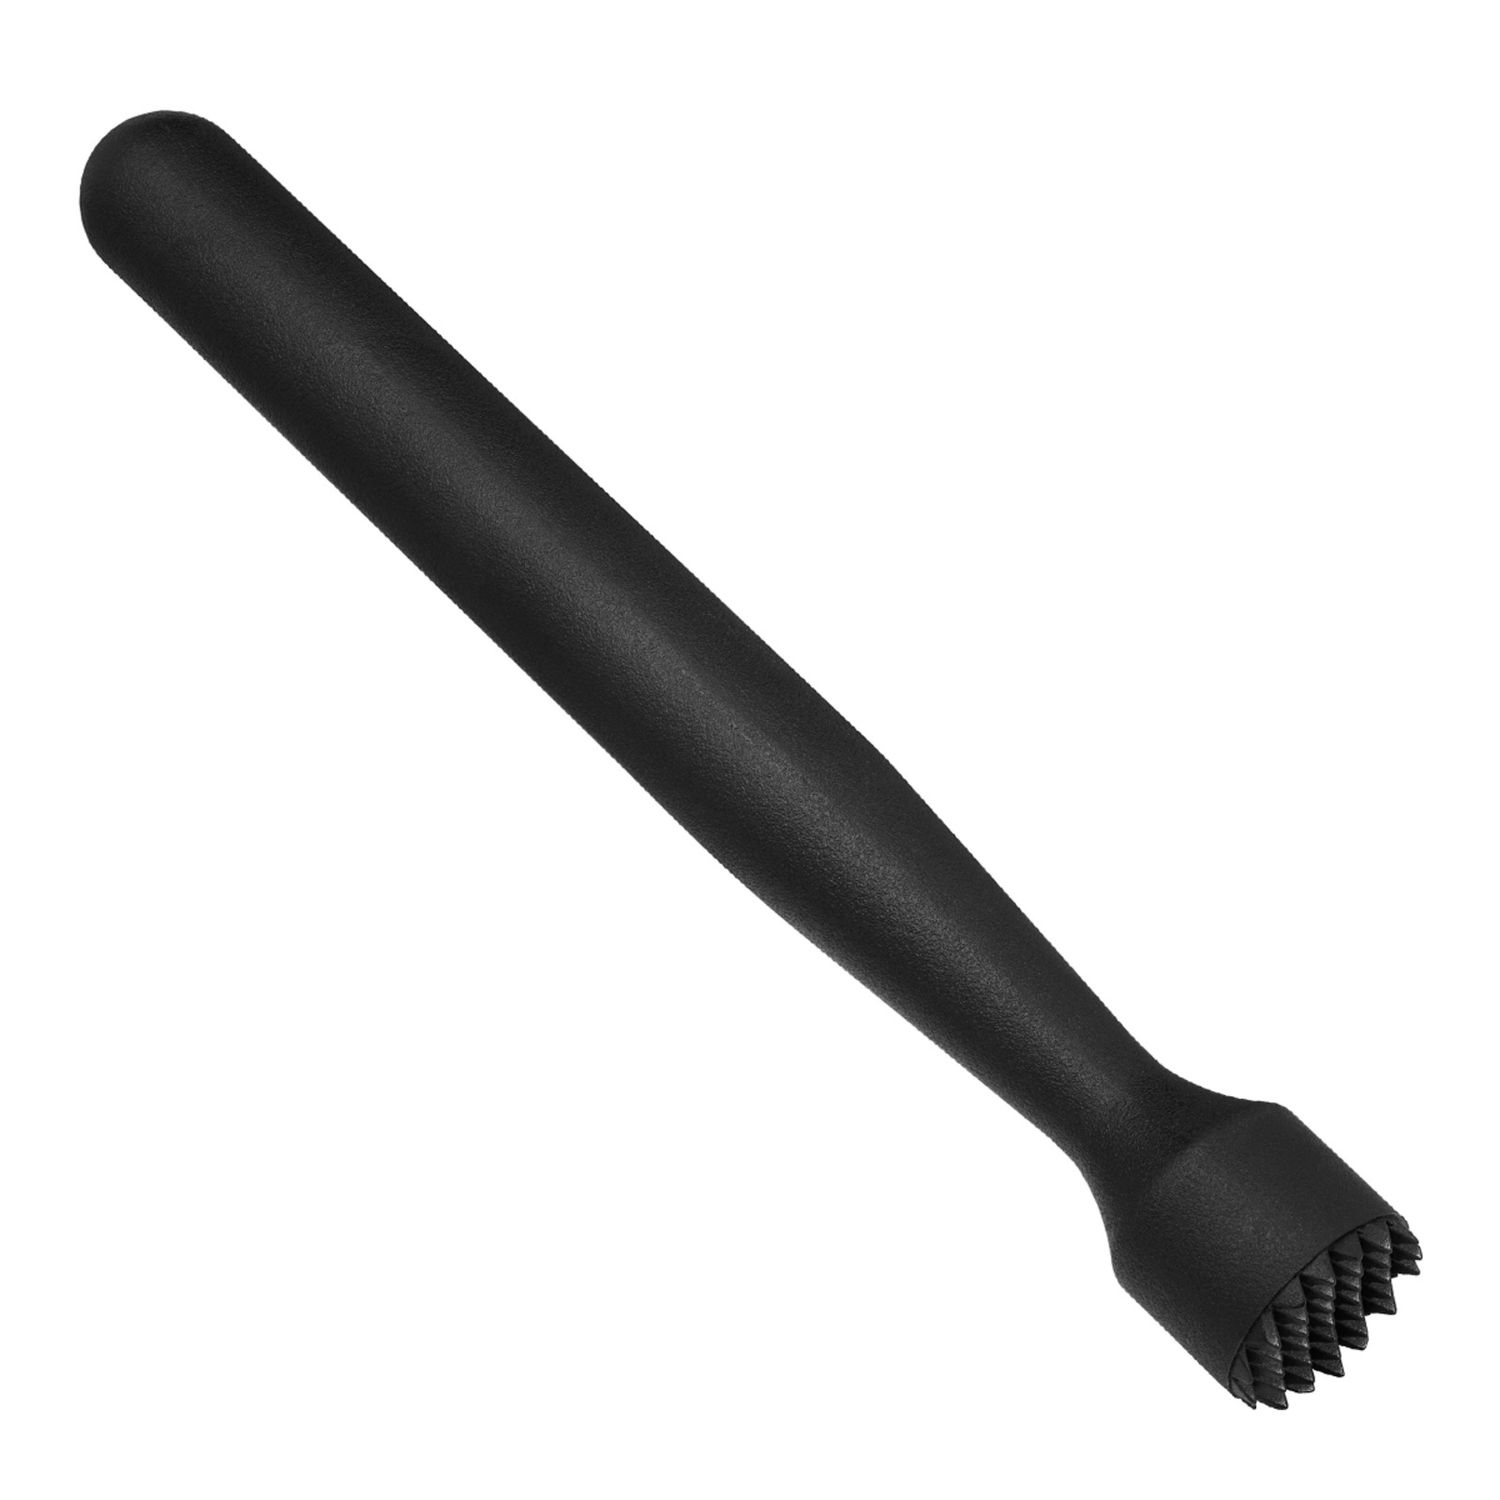 Pilon Caipirinha - plastique noir avec extrémité dentelée (20cm)